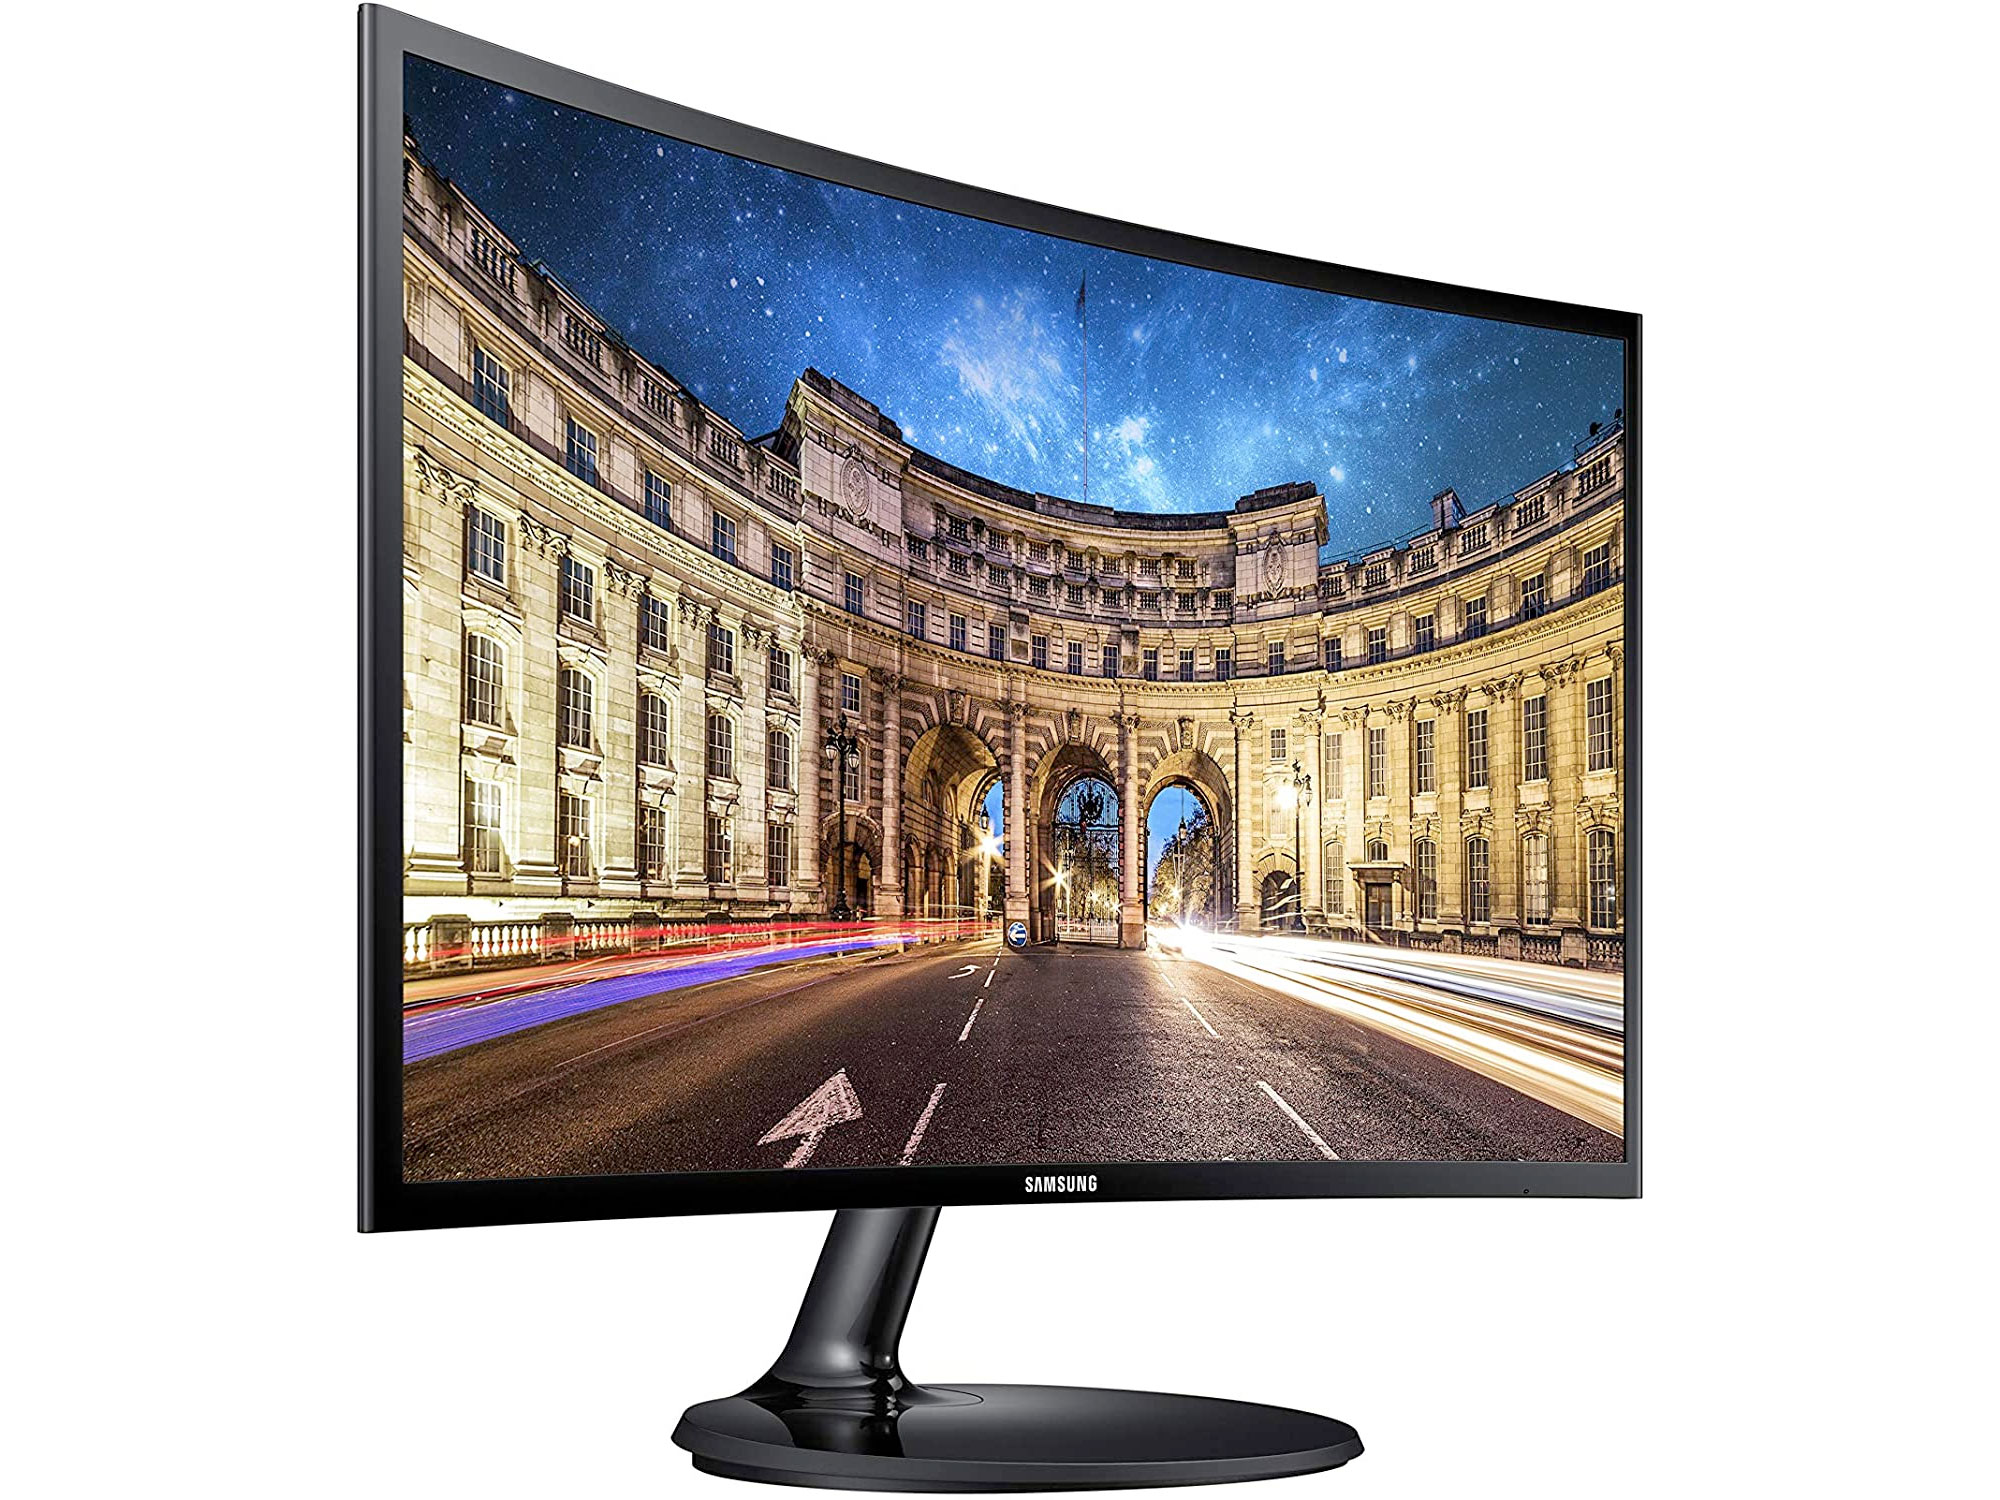 Amazon：Samsung LED 24吋全高清(Full HD)曲面电脑显示屏 (curved monitor)只卖$147.99